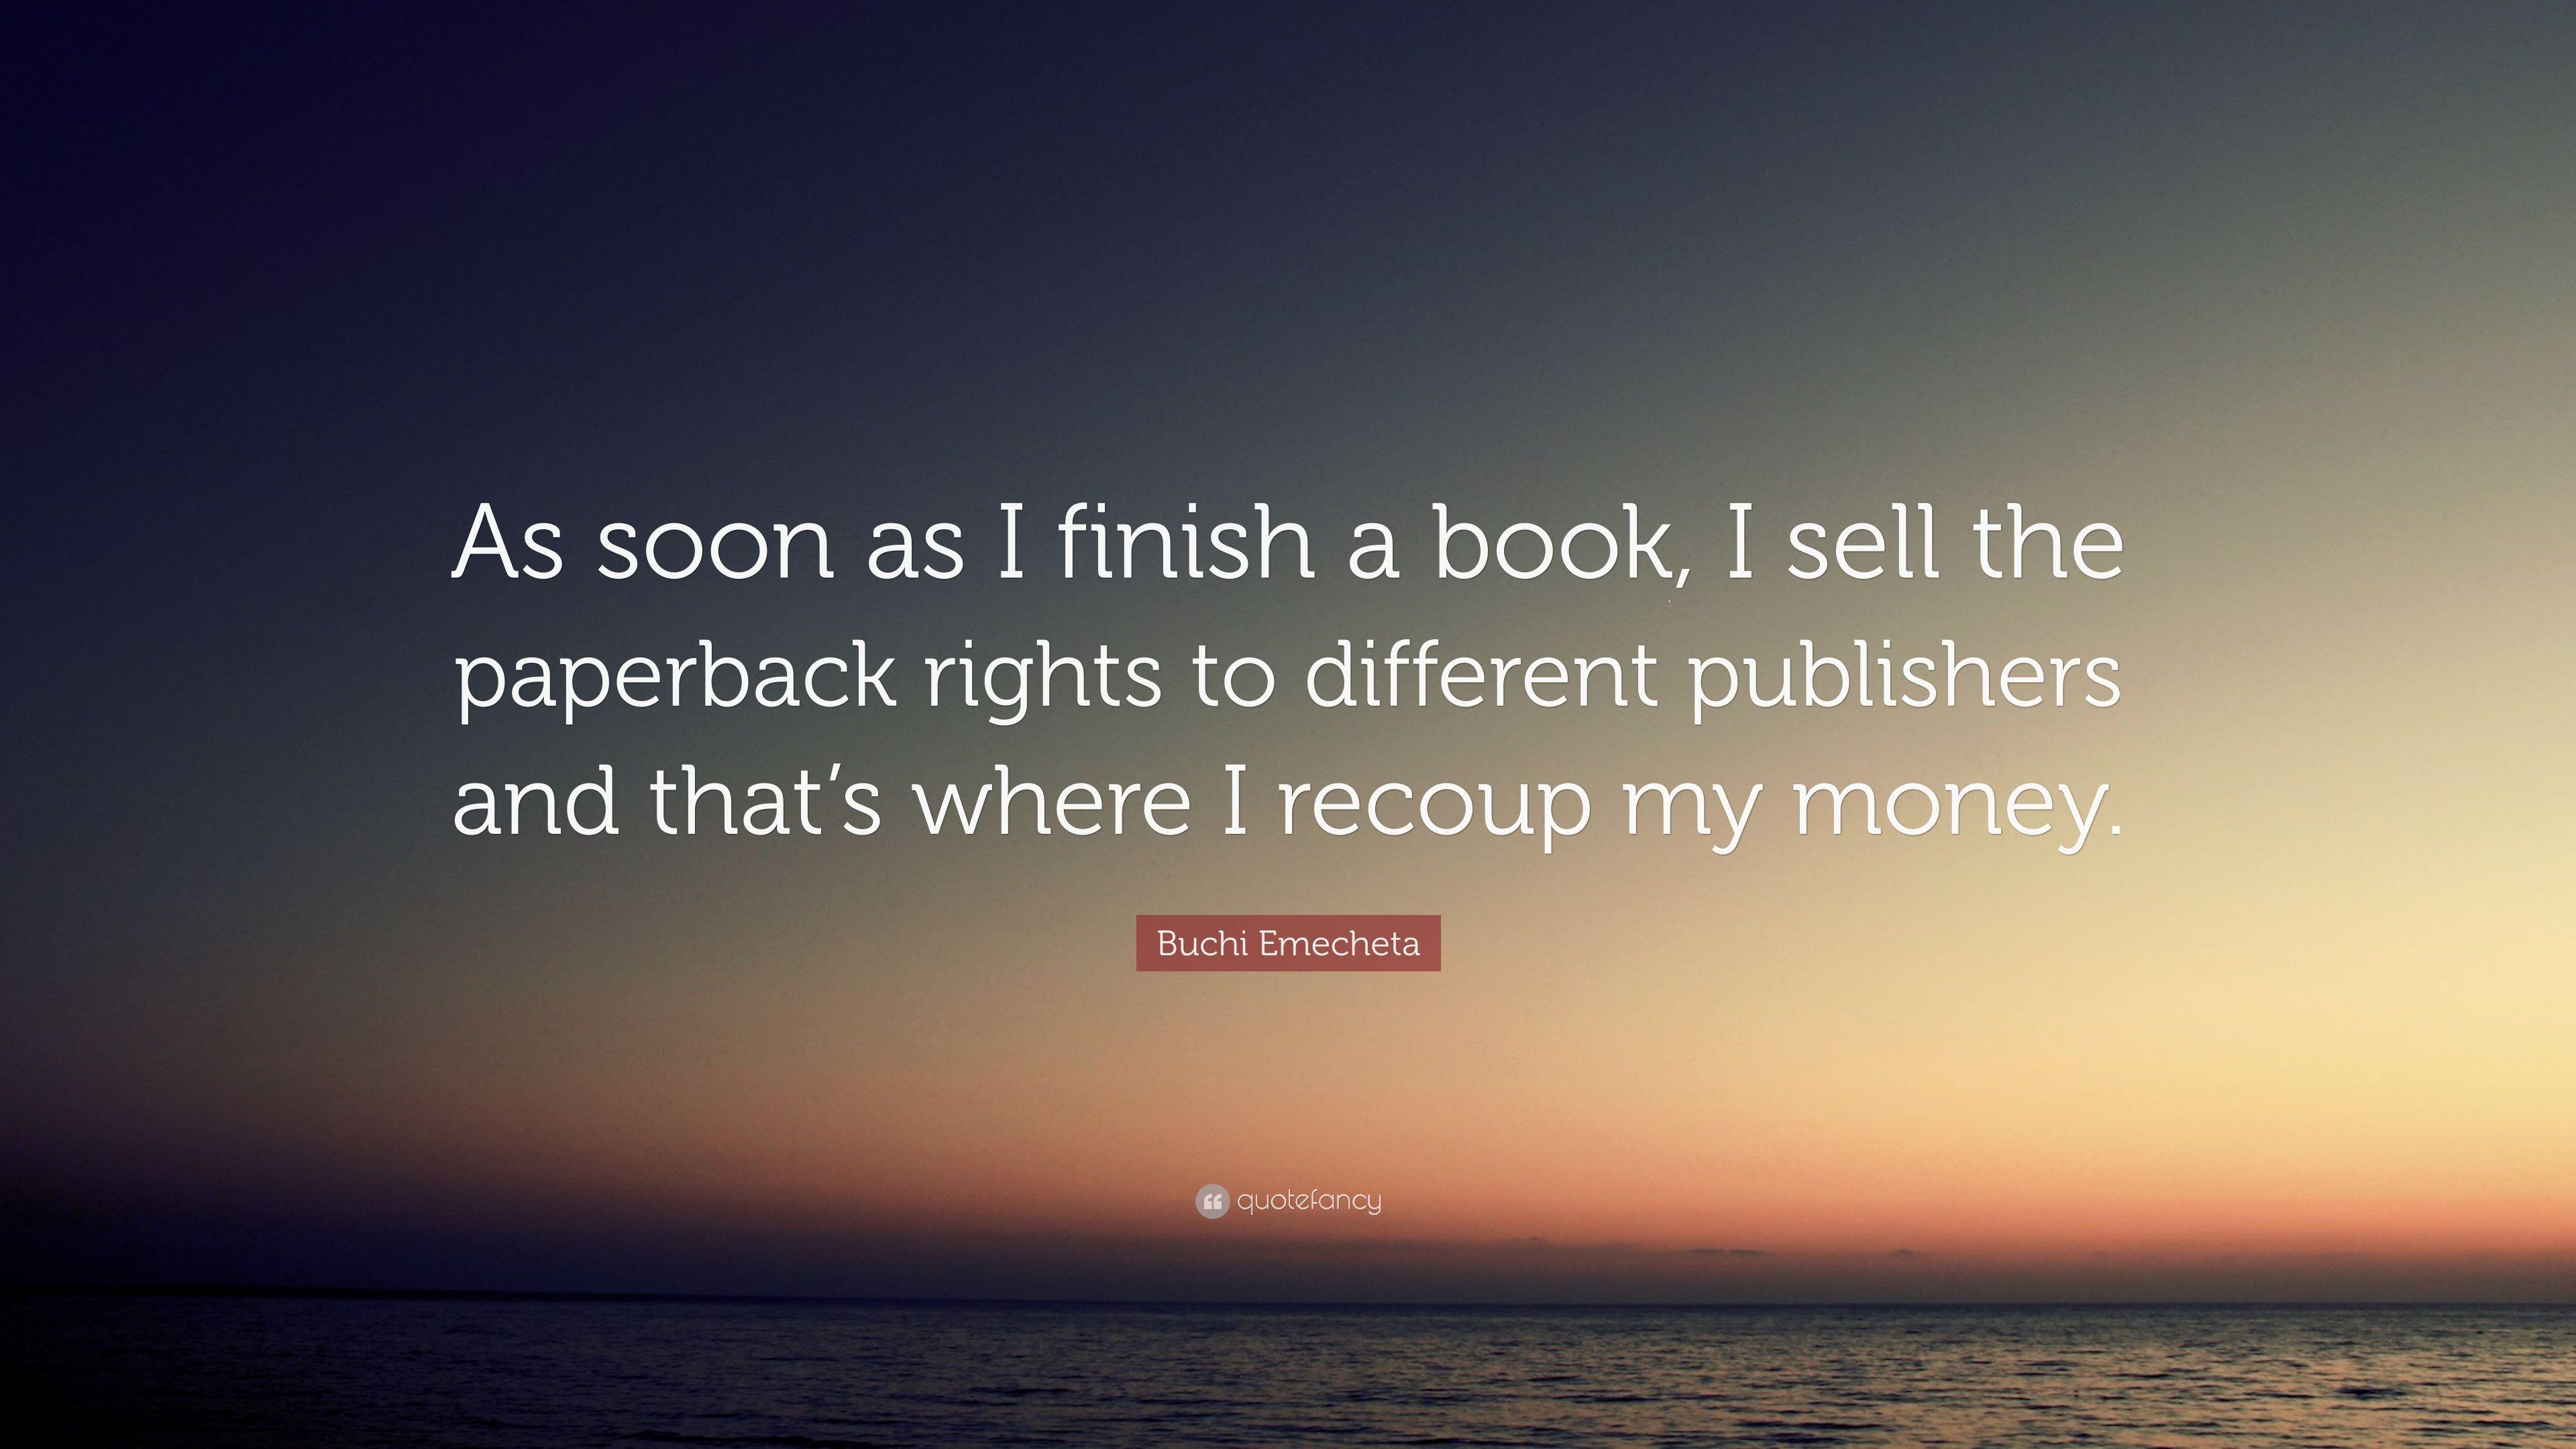 Buchi Emecheta Quote: “As soon as I finish a book, I sell